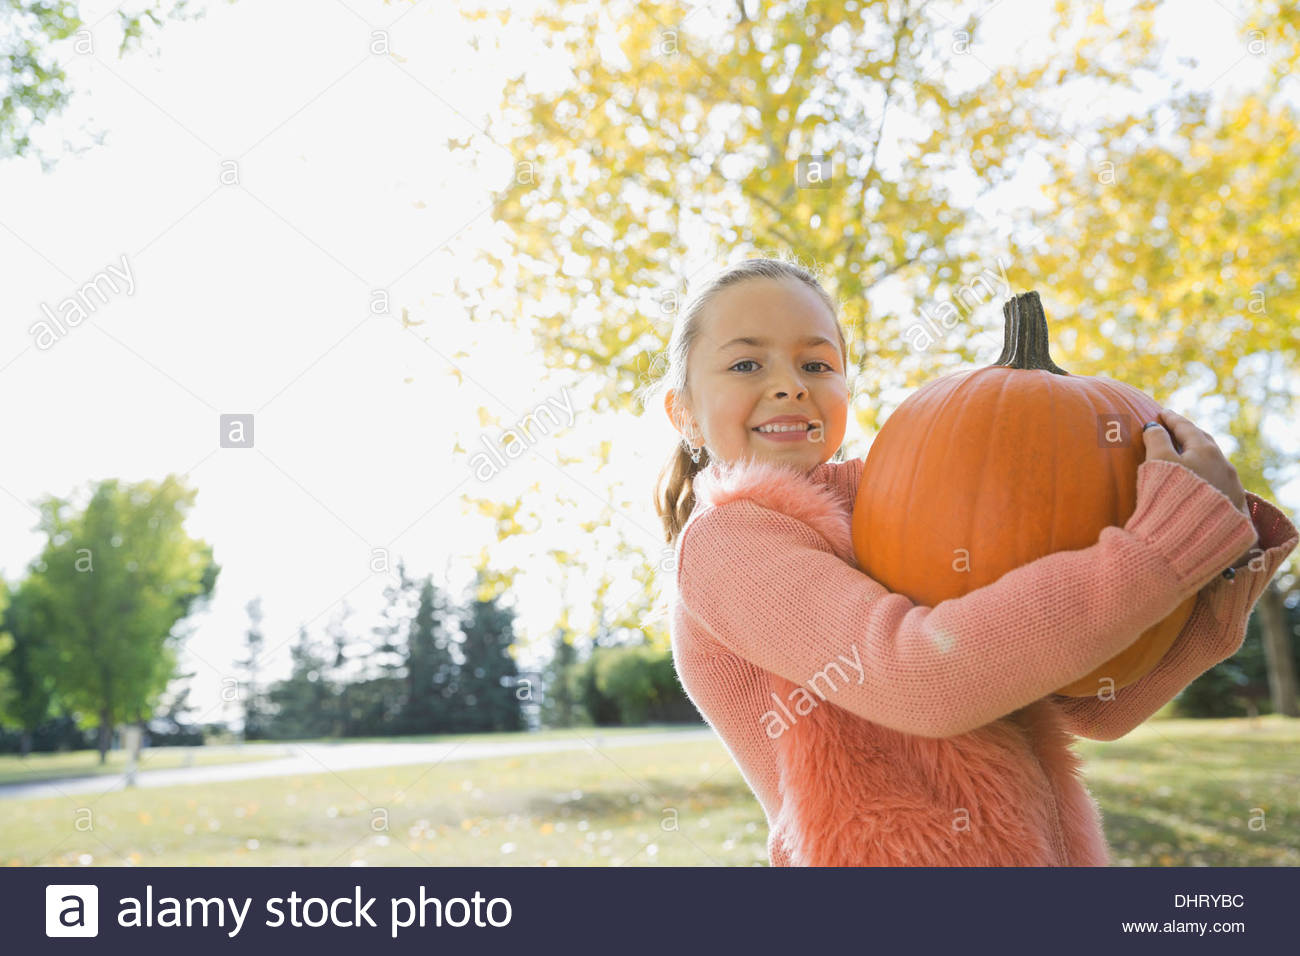 Portrait of happy girl carrying pumpkin Stock Photo